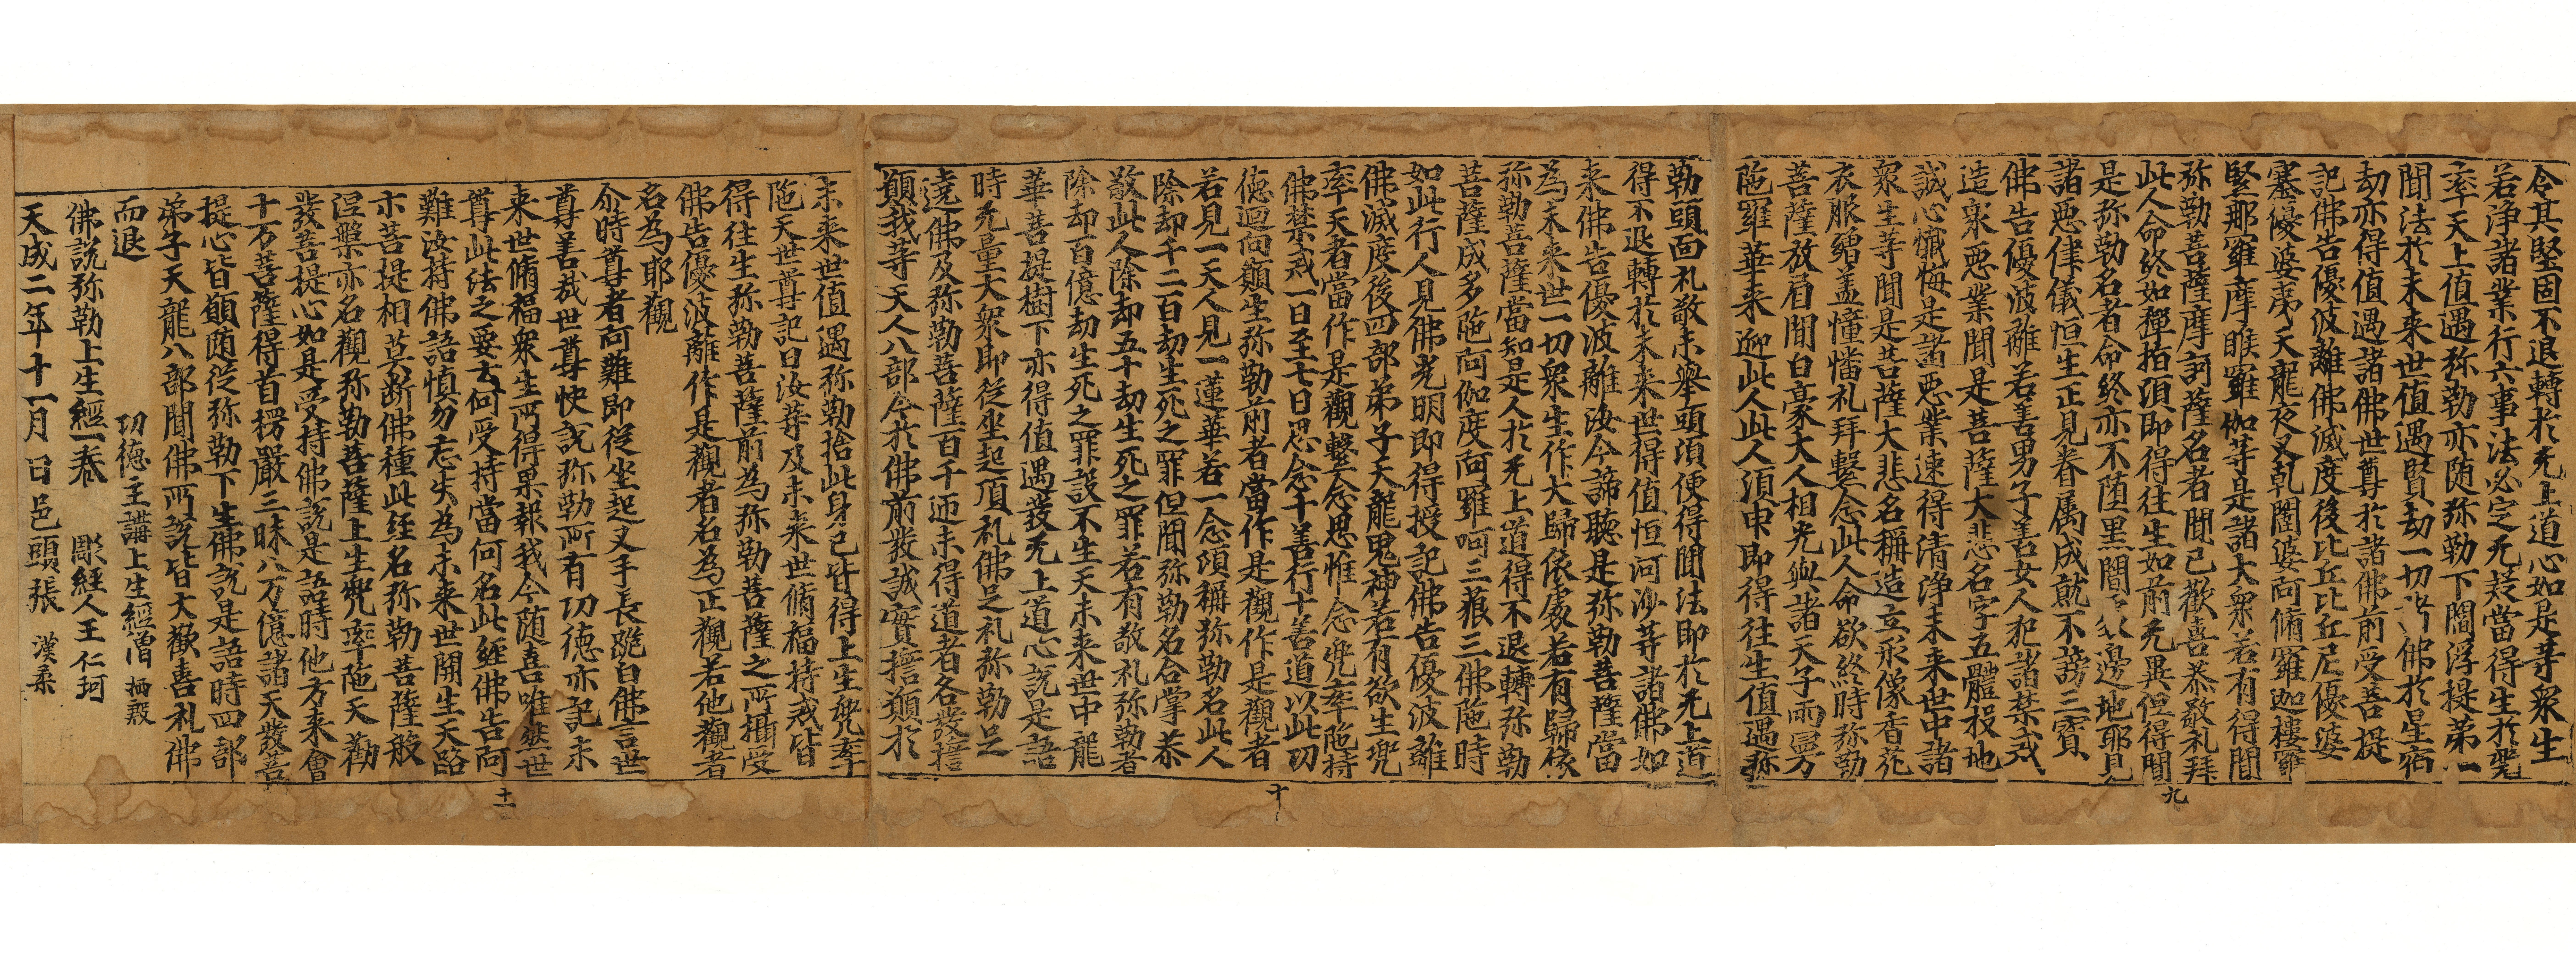 The restored Bodhisattva Maitreya’s Previous Life in Tusita Heaven , printed in 927